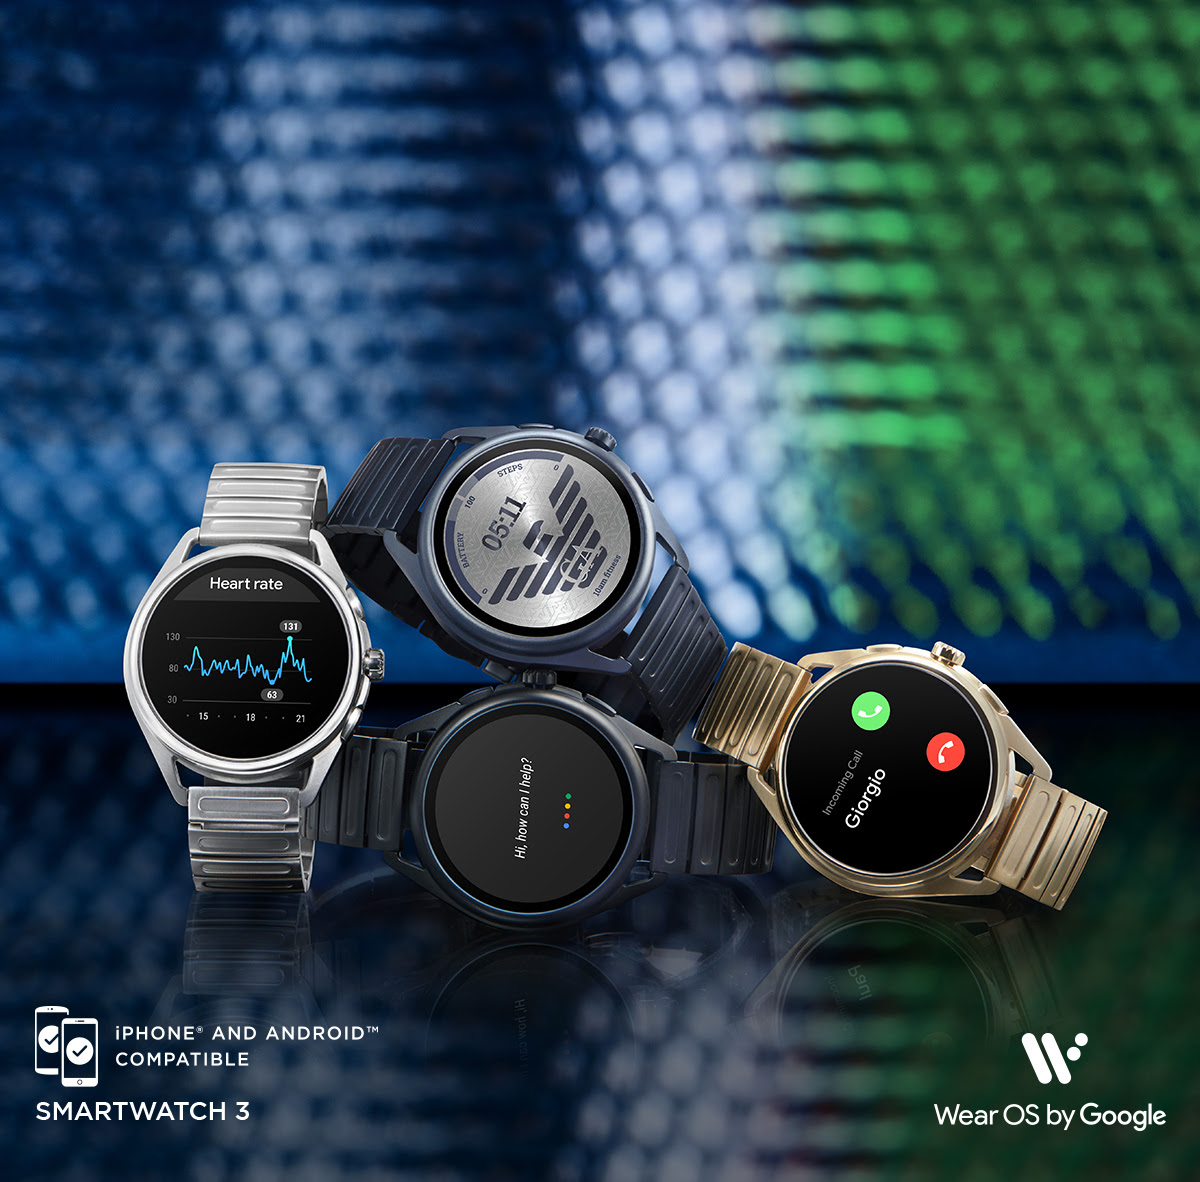 Armani.com - Discover what the Emporio Armani smartwatch can do